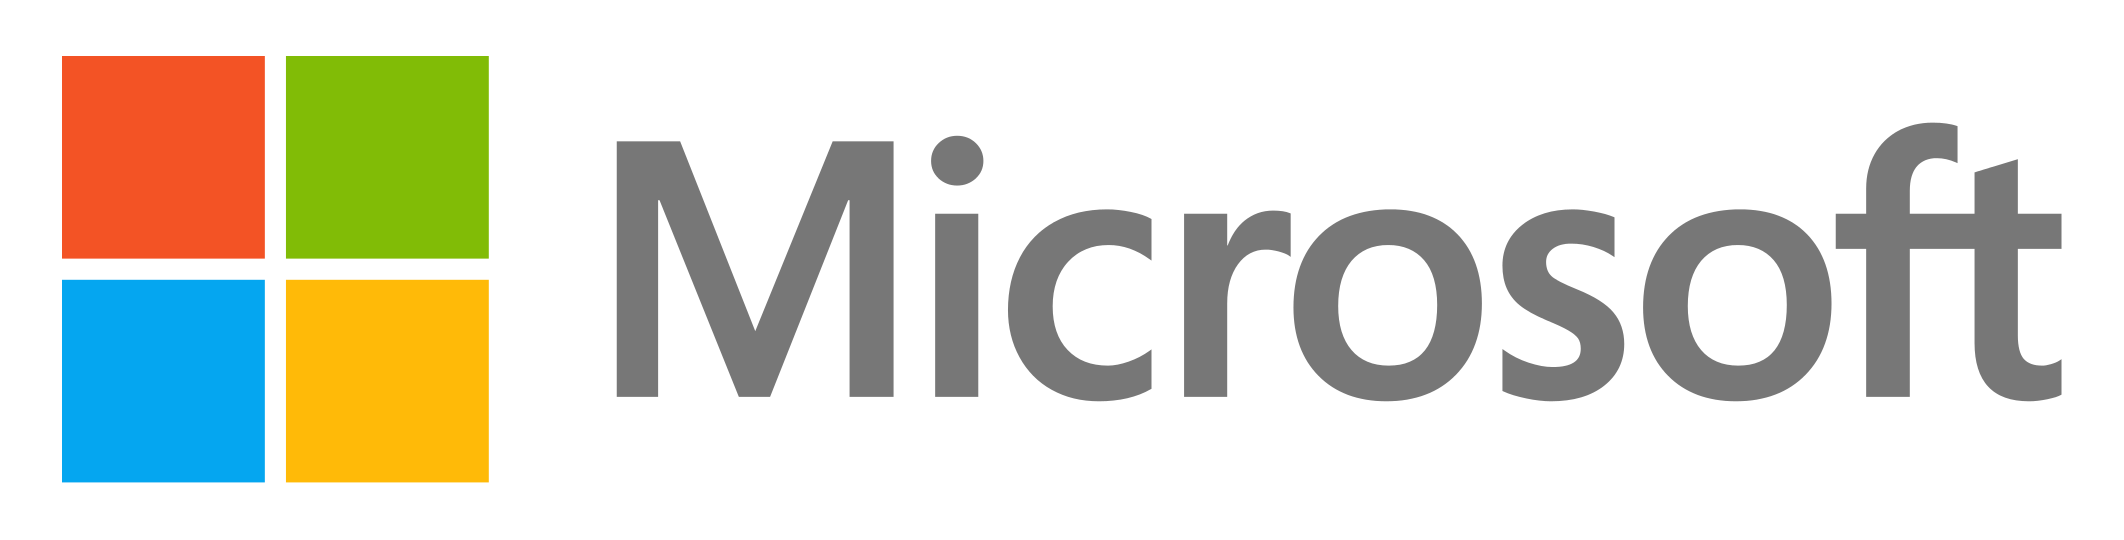 logo for MICROSOFT